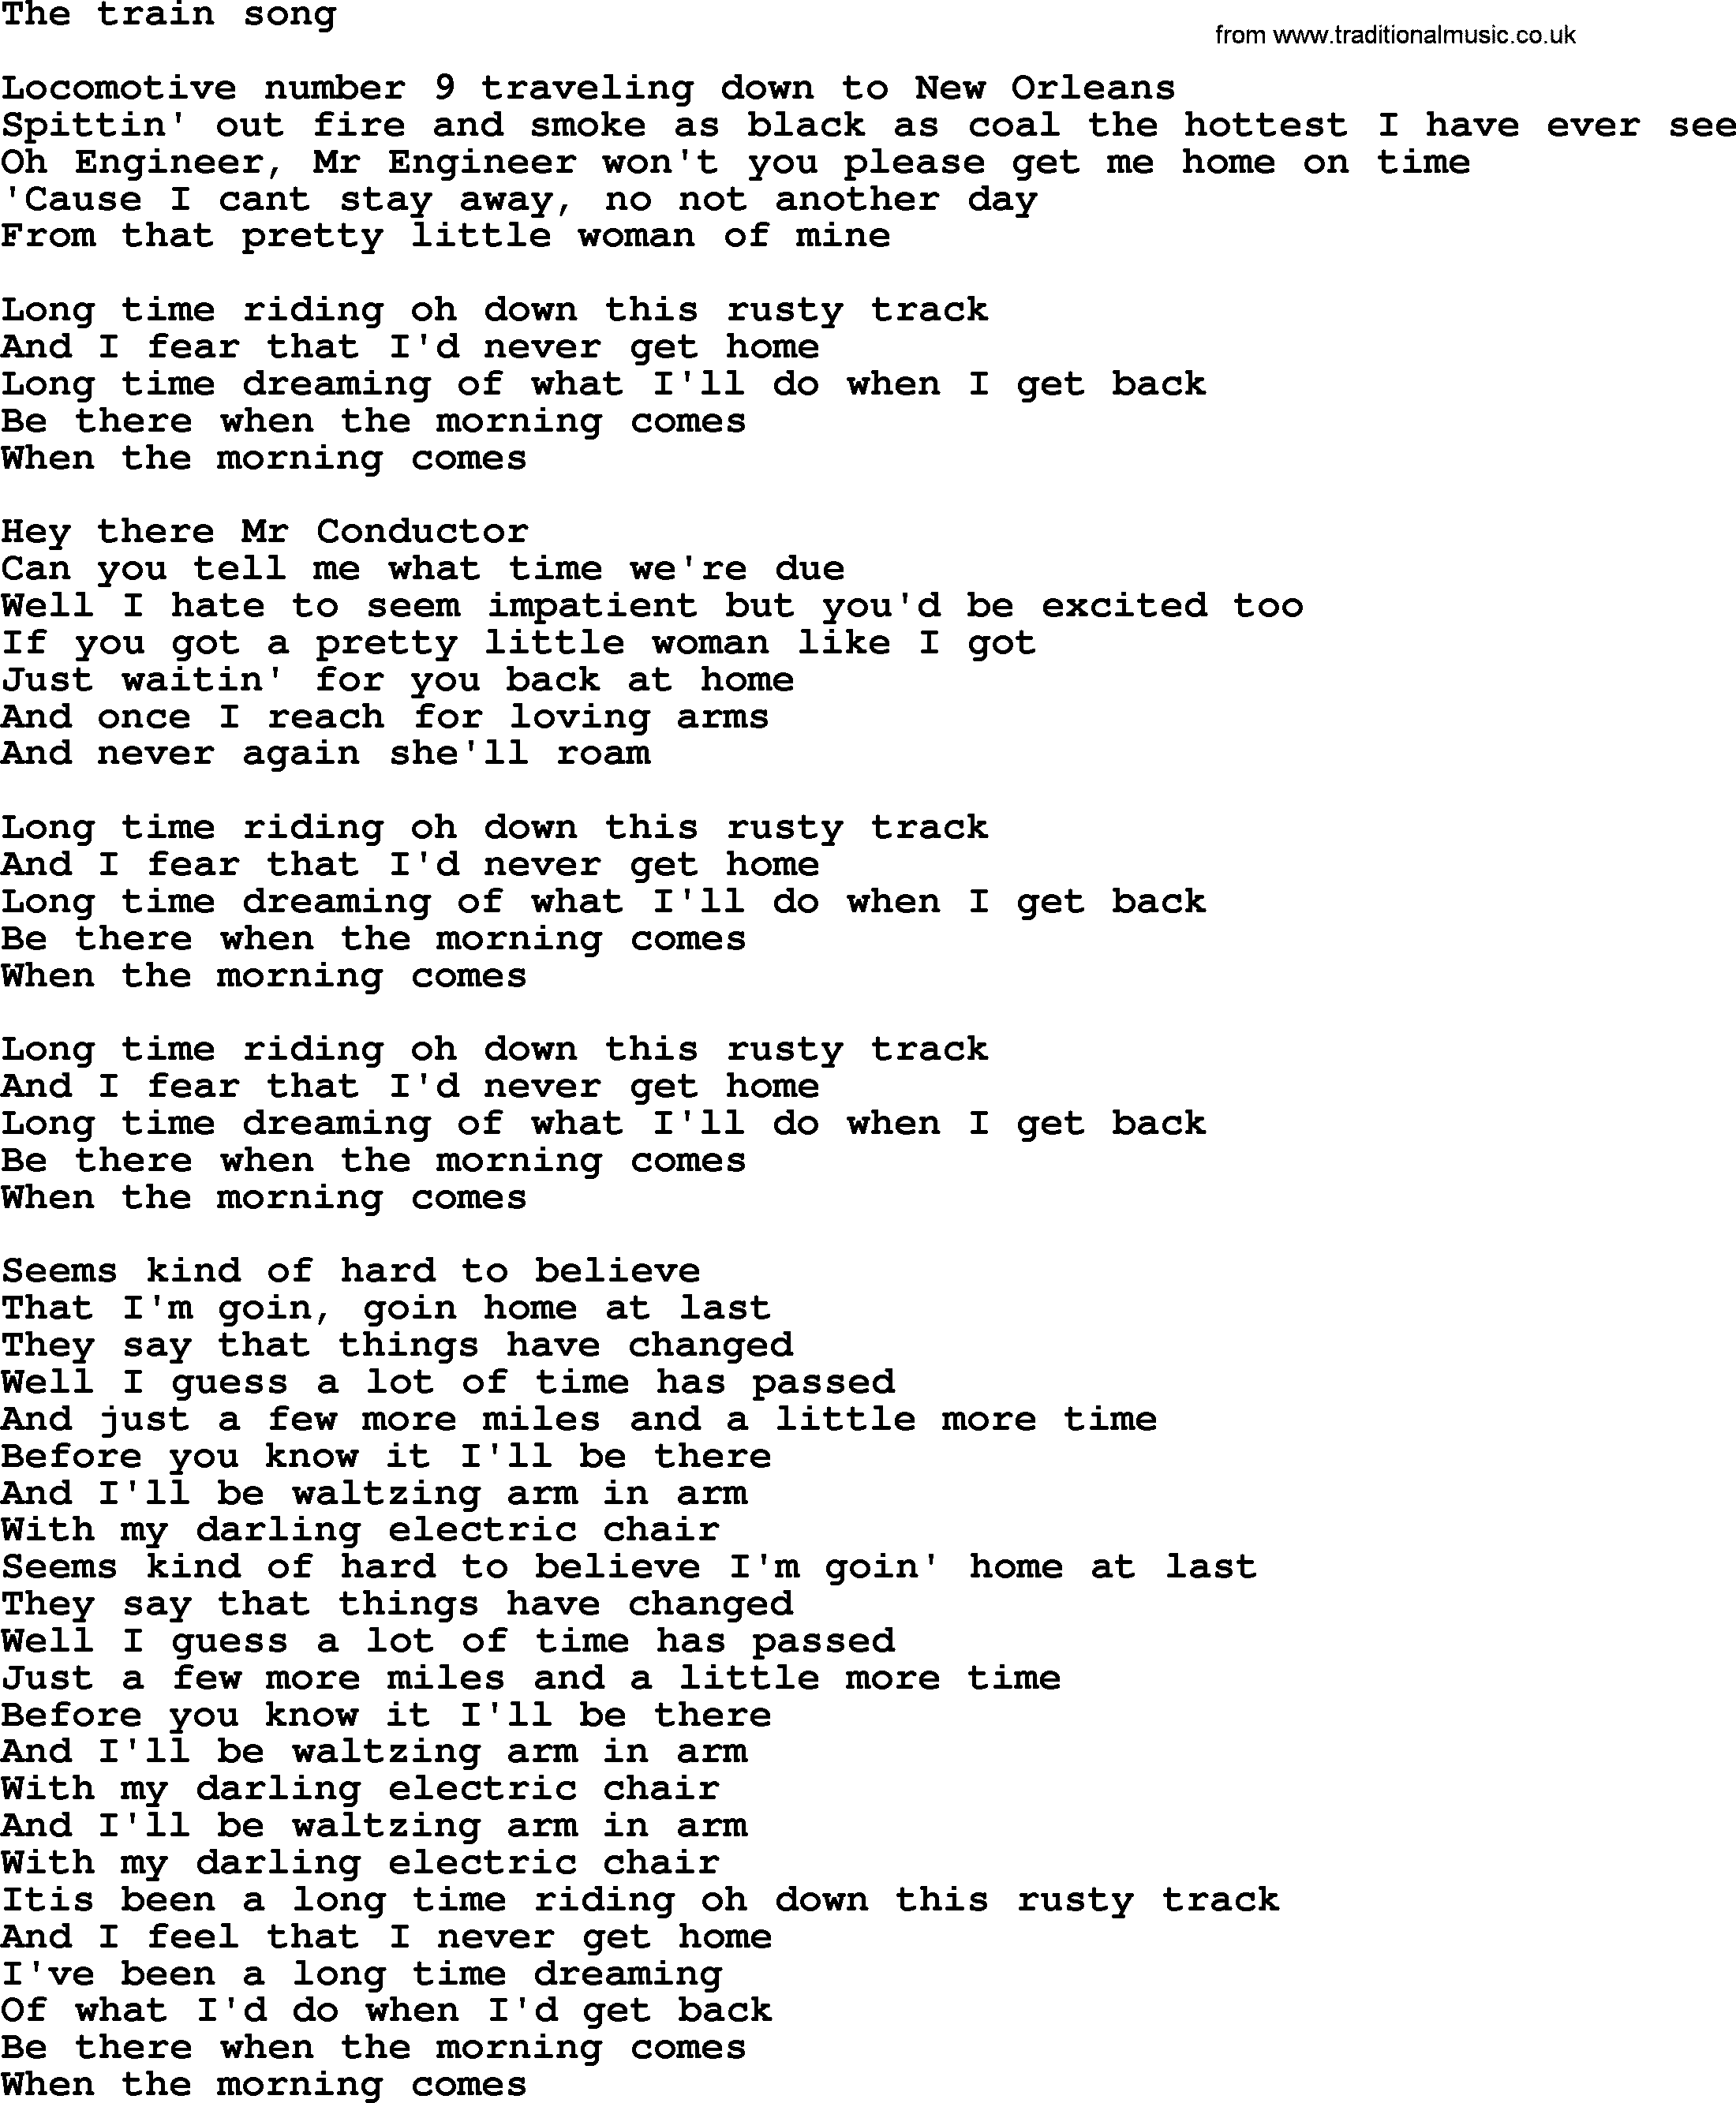 Bruce Springsteen song: The Train Song, lyrics